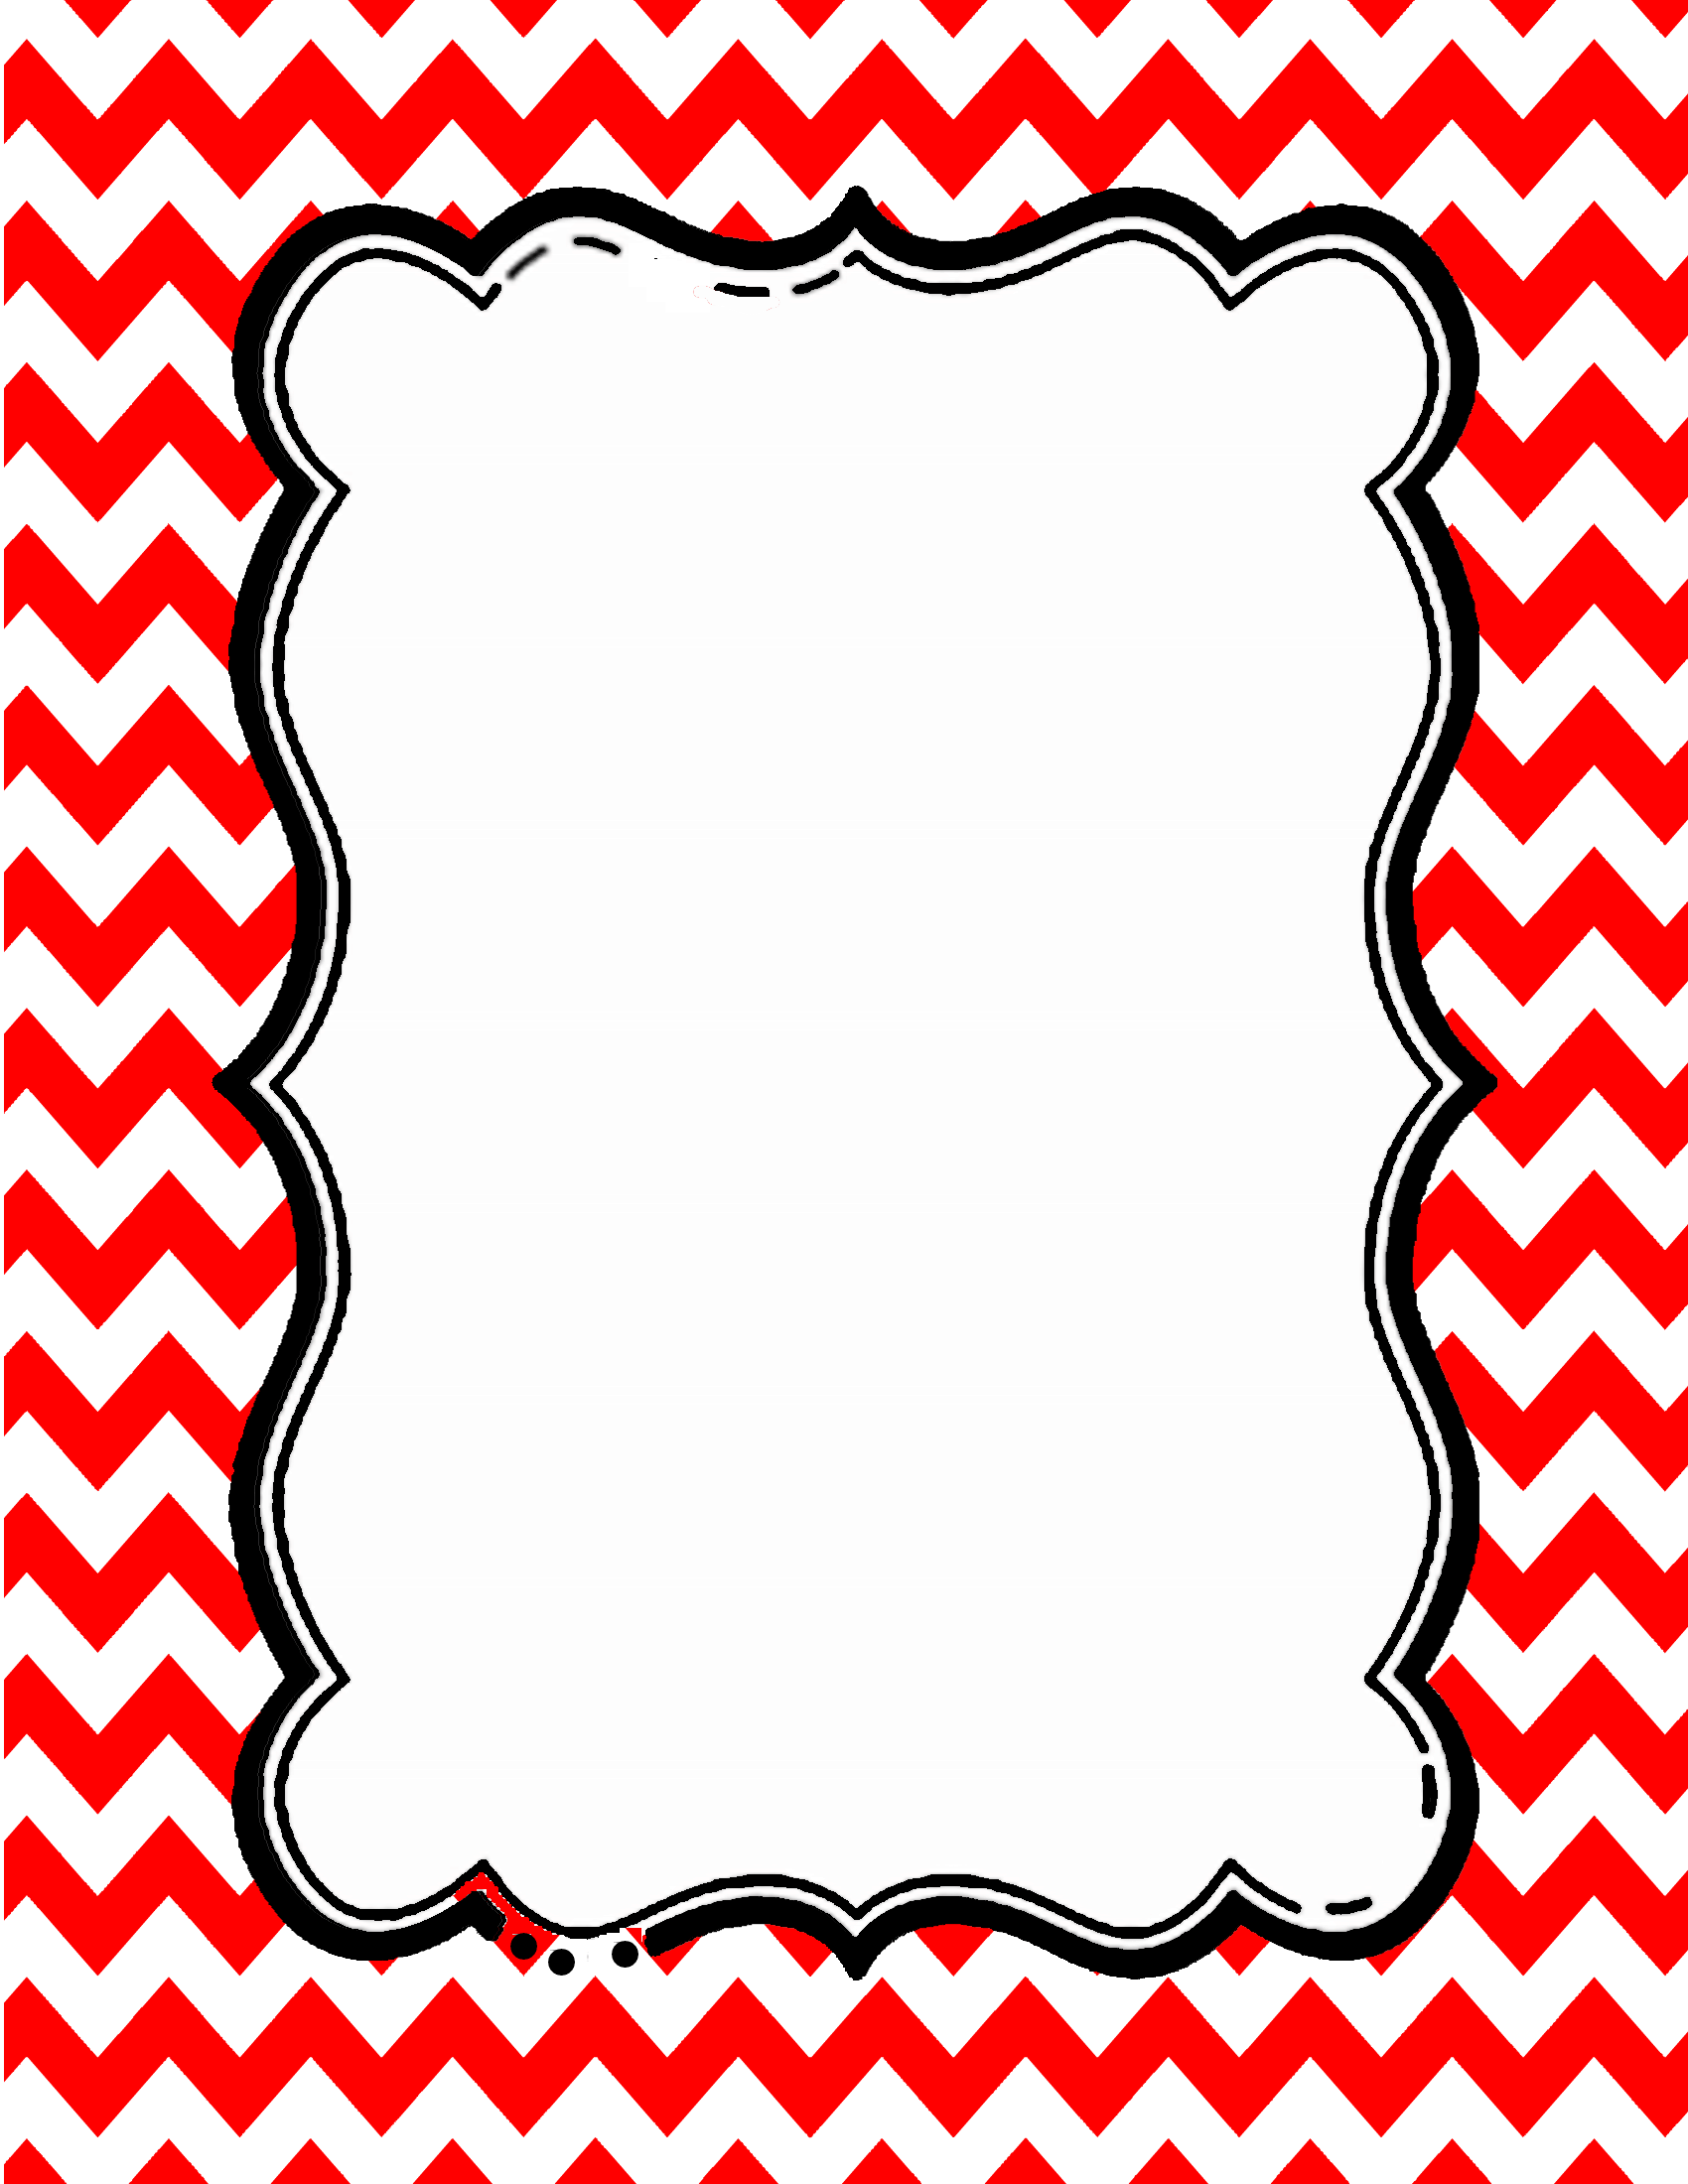 Red - Black And White Chevron Border (1700x2200)